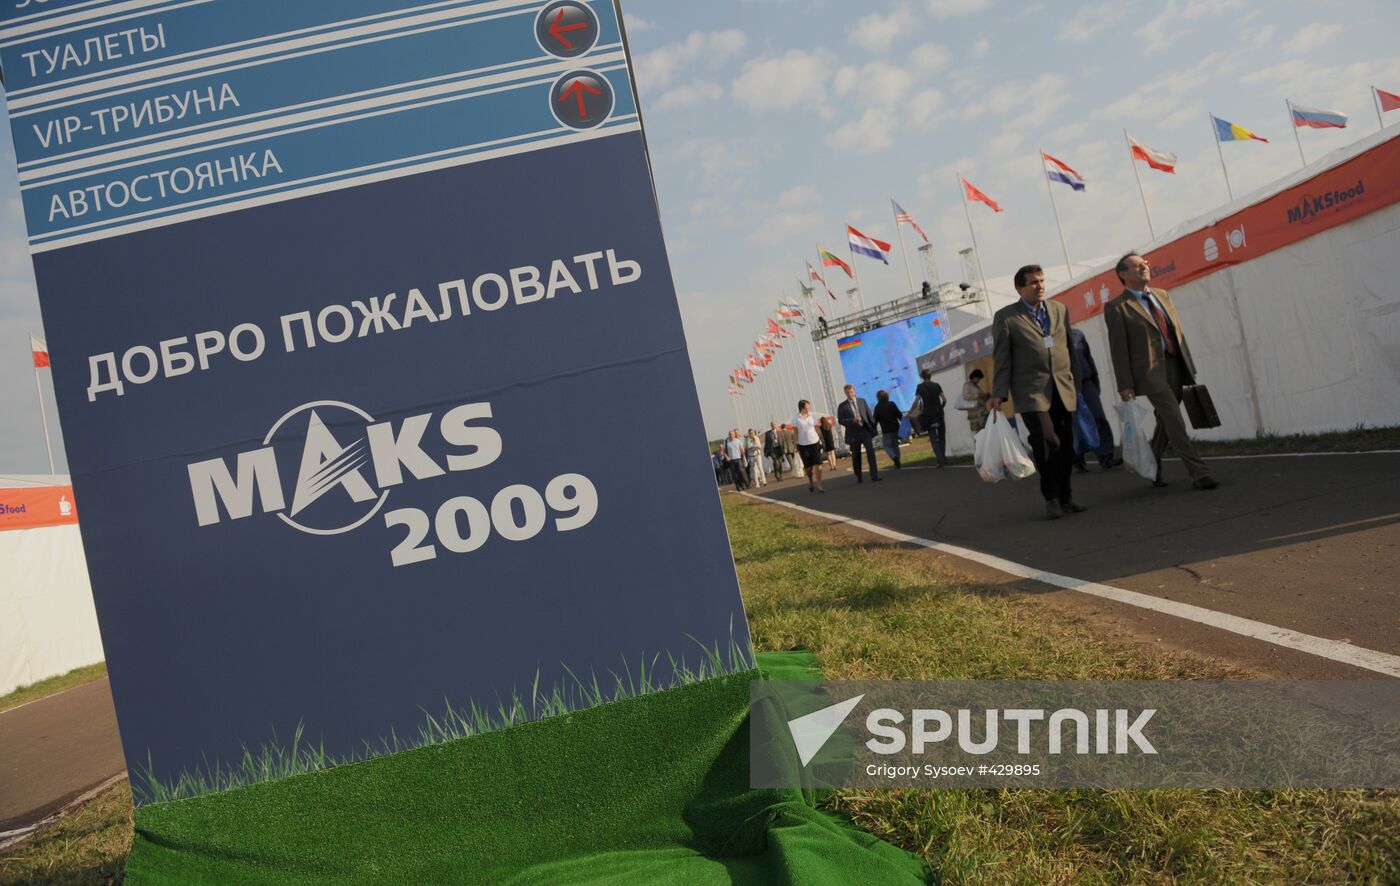 MAKS 2009 air show opens in Zhukovsky